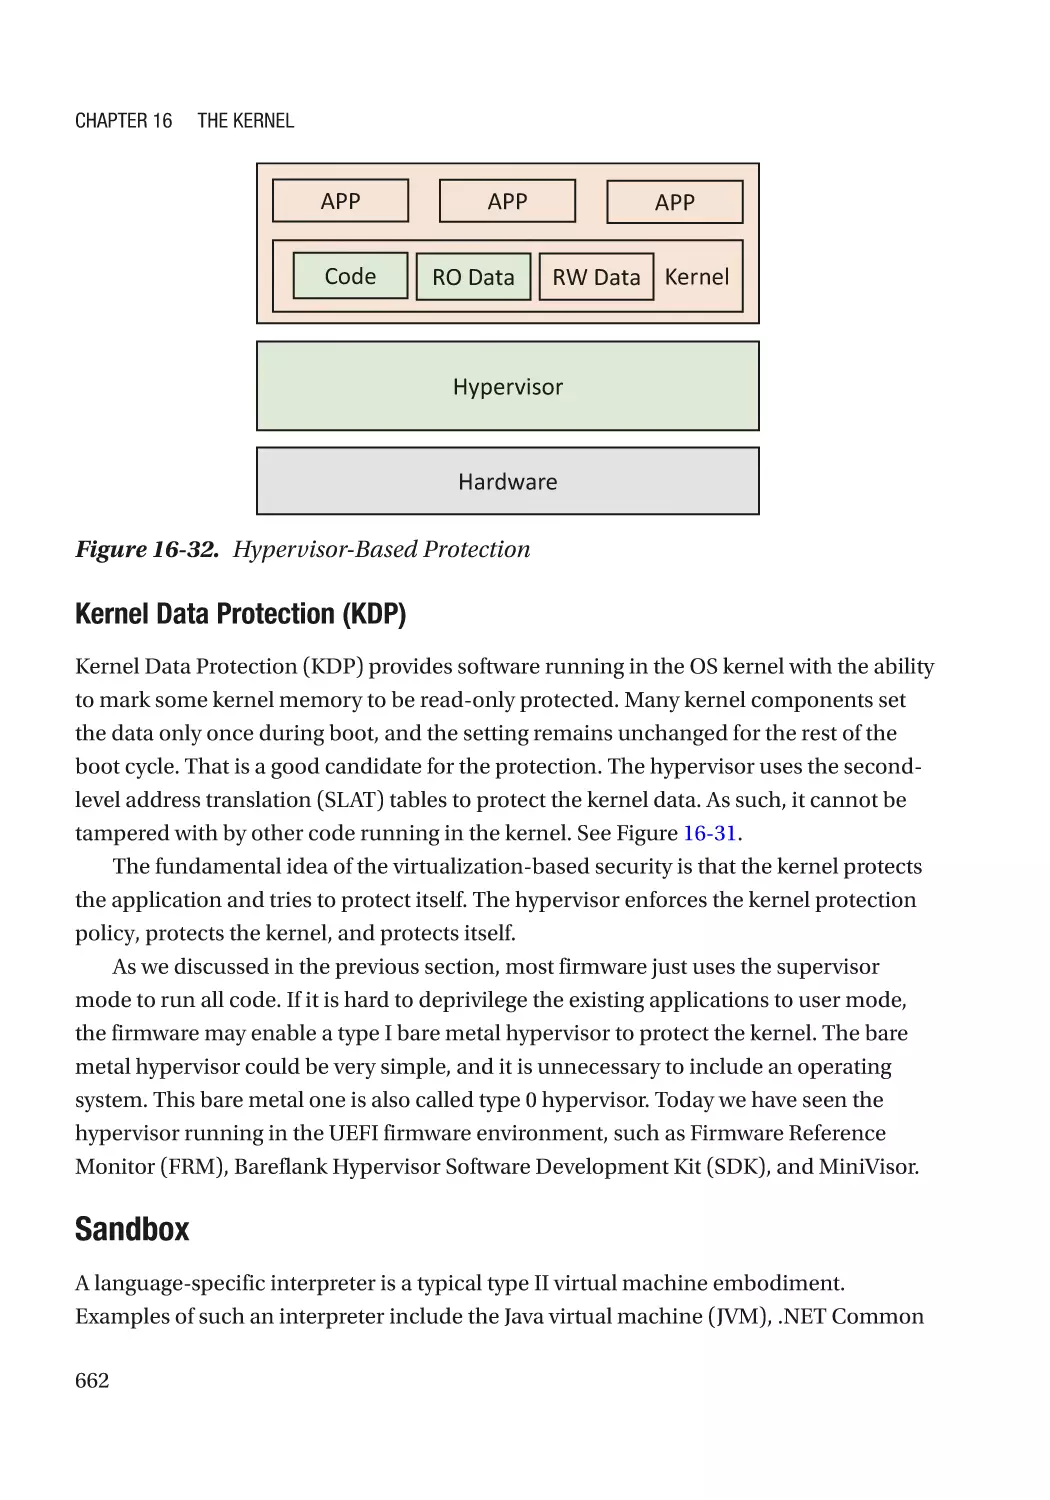 Kernel Data Protection (KDP)
Sandbox